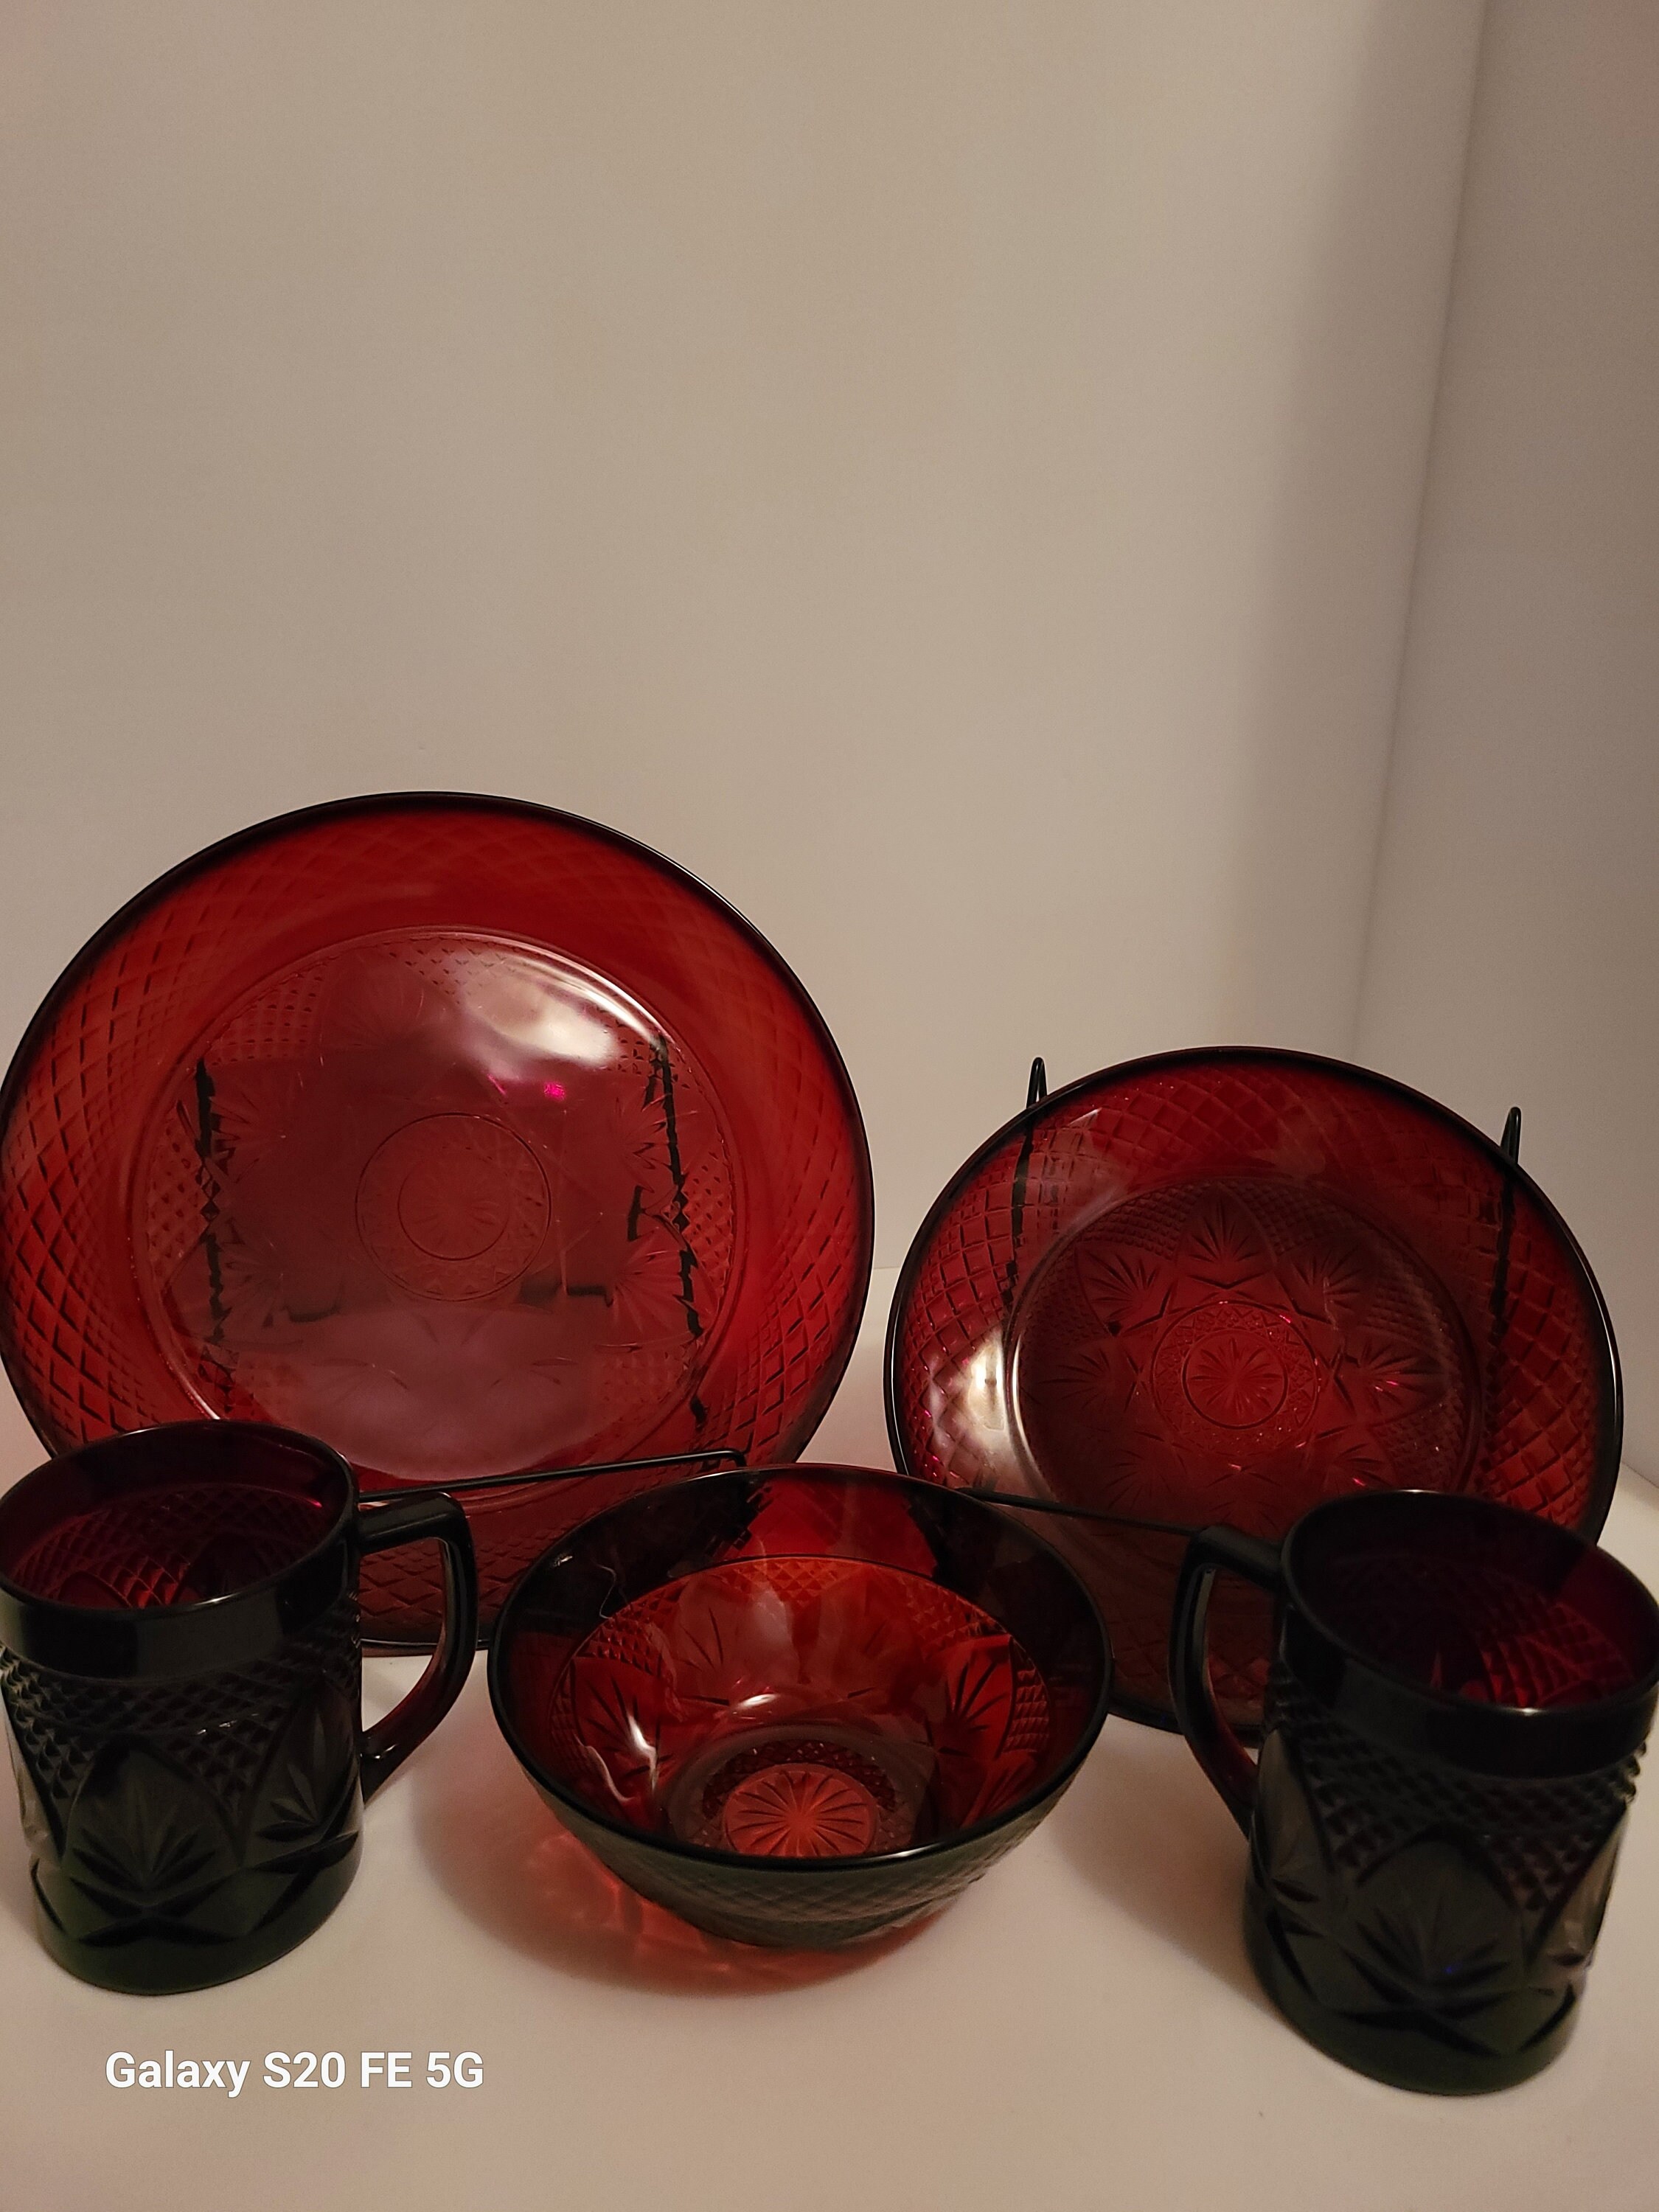 20 oz britannica glass mug - MADE IN USA [38518] : Splendids Dinnerware,  Wholesale Dinnerware and Glassware for Restaurant and Home